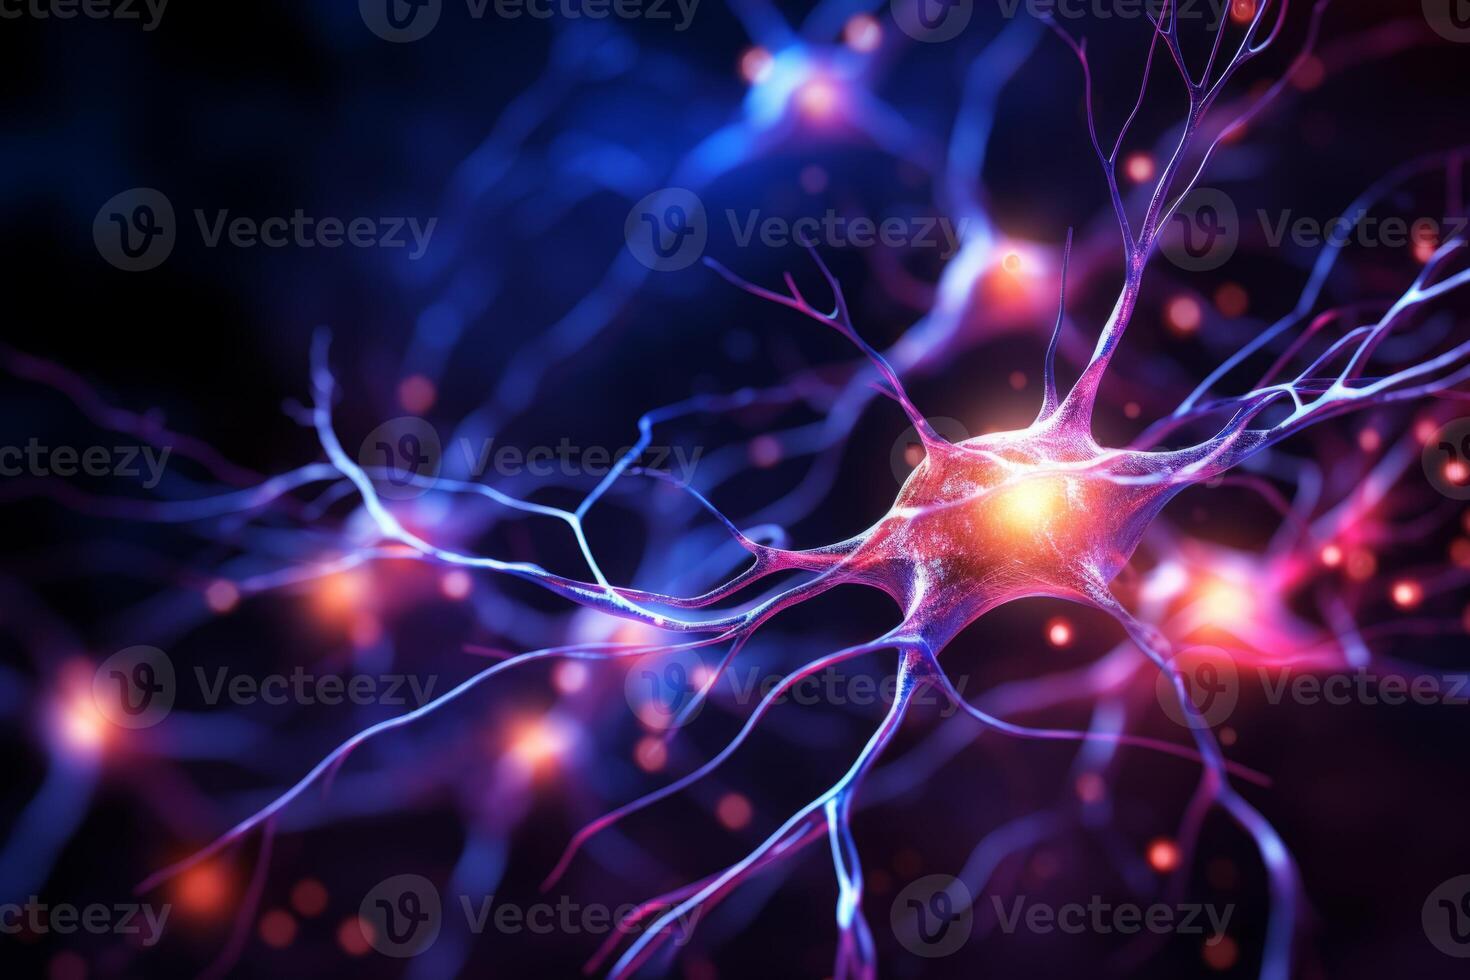 AI Generated Neuron cells neural network under microscope neuro research science brain signal information transfer human neurology mind mental impulse biology anatomy microbiology intelligence photo